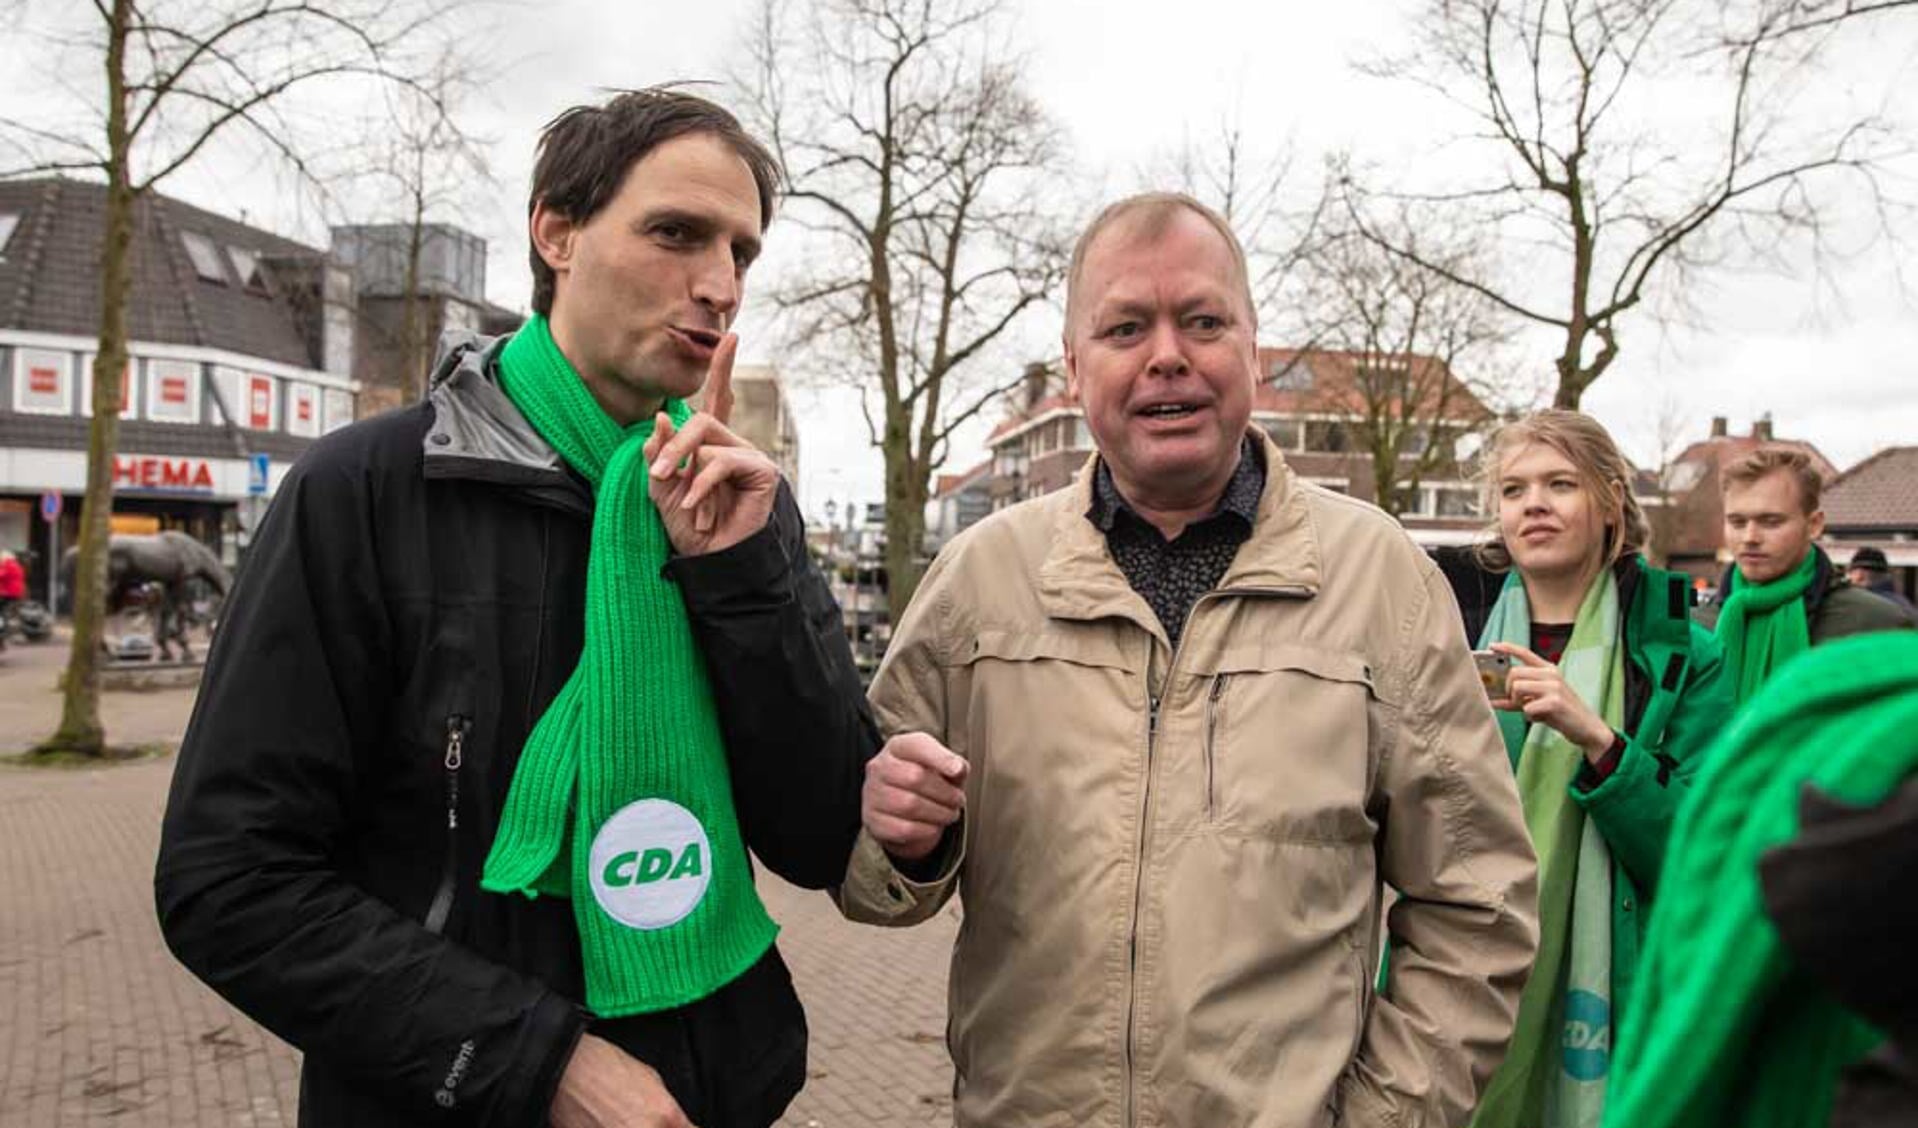 Johan Hut met CDA-minister Wopke Hoekstra die in maart 2019 in Baarn op verkiezingscampagne was, voor de Provinciale Statenverkiezingen.